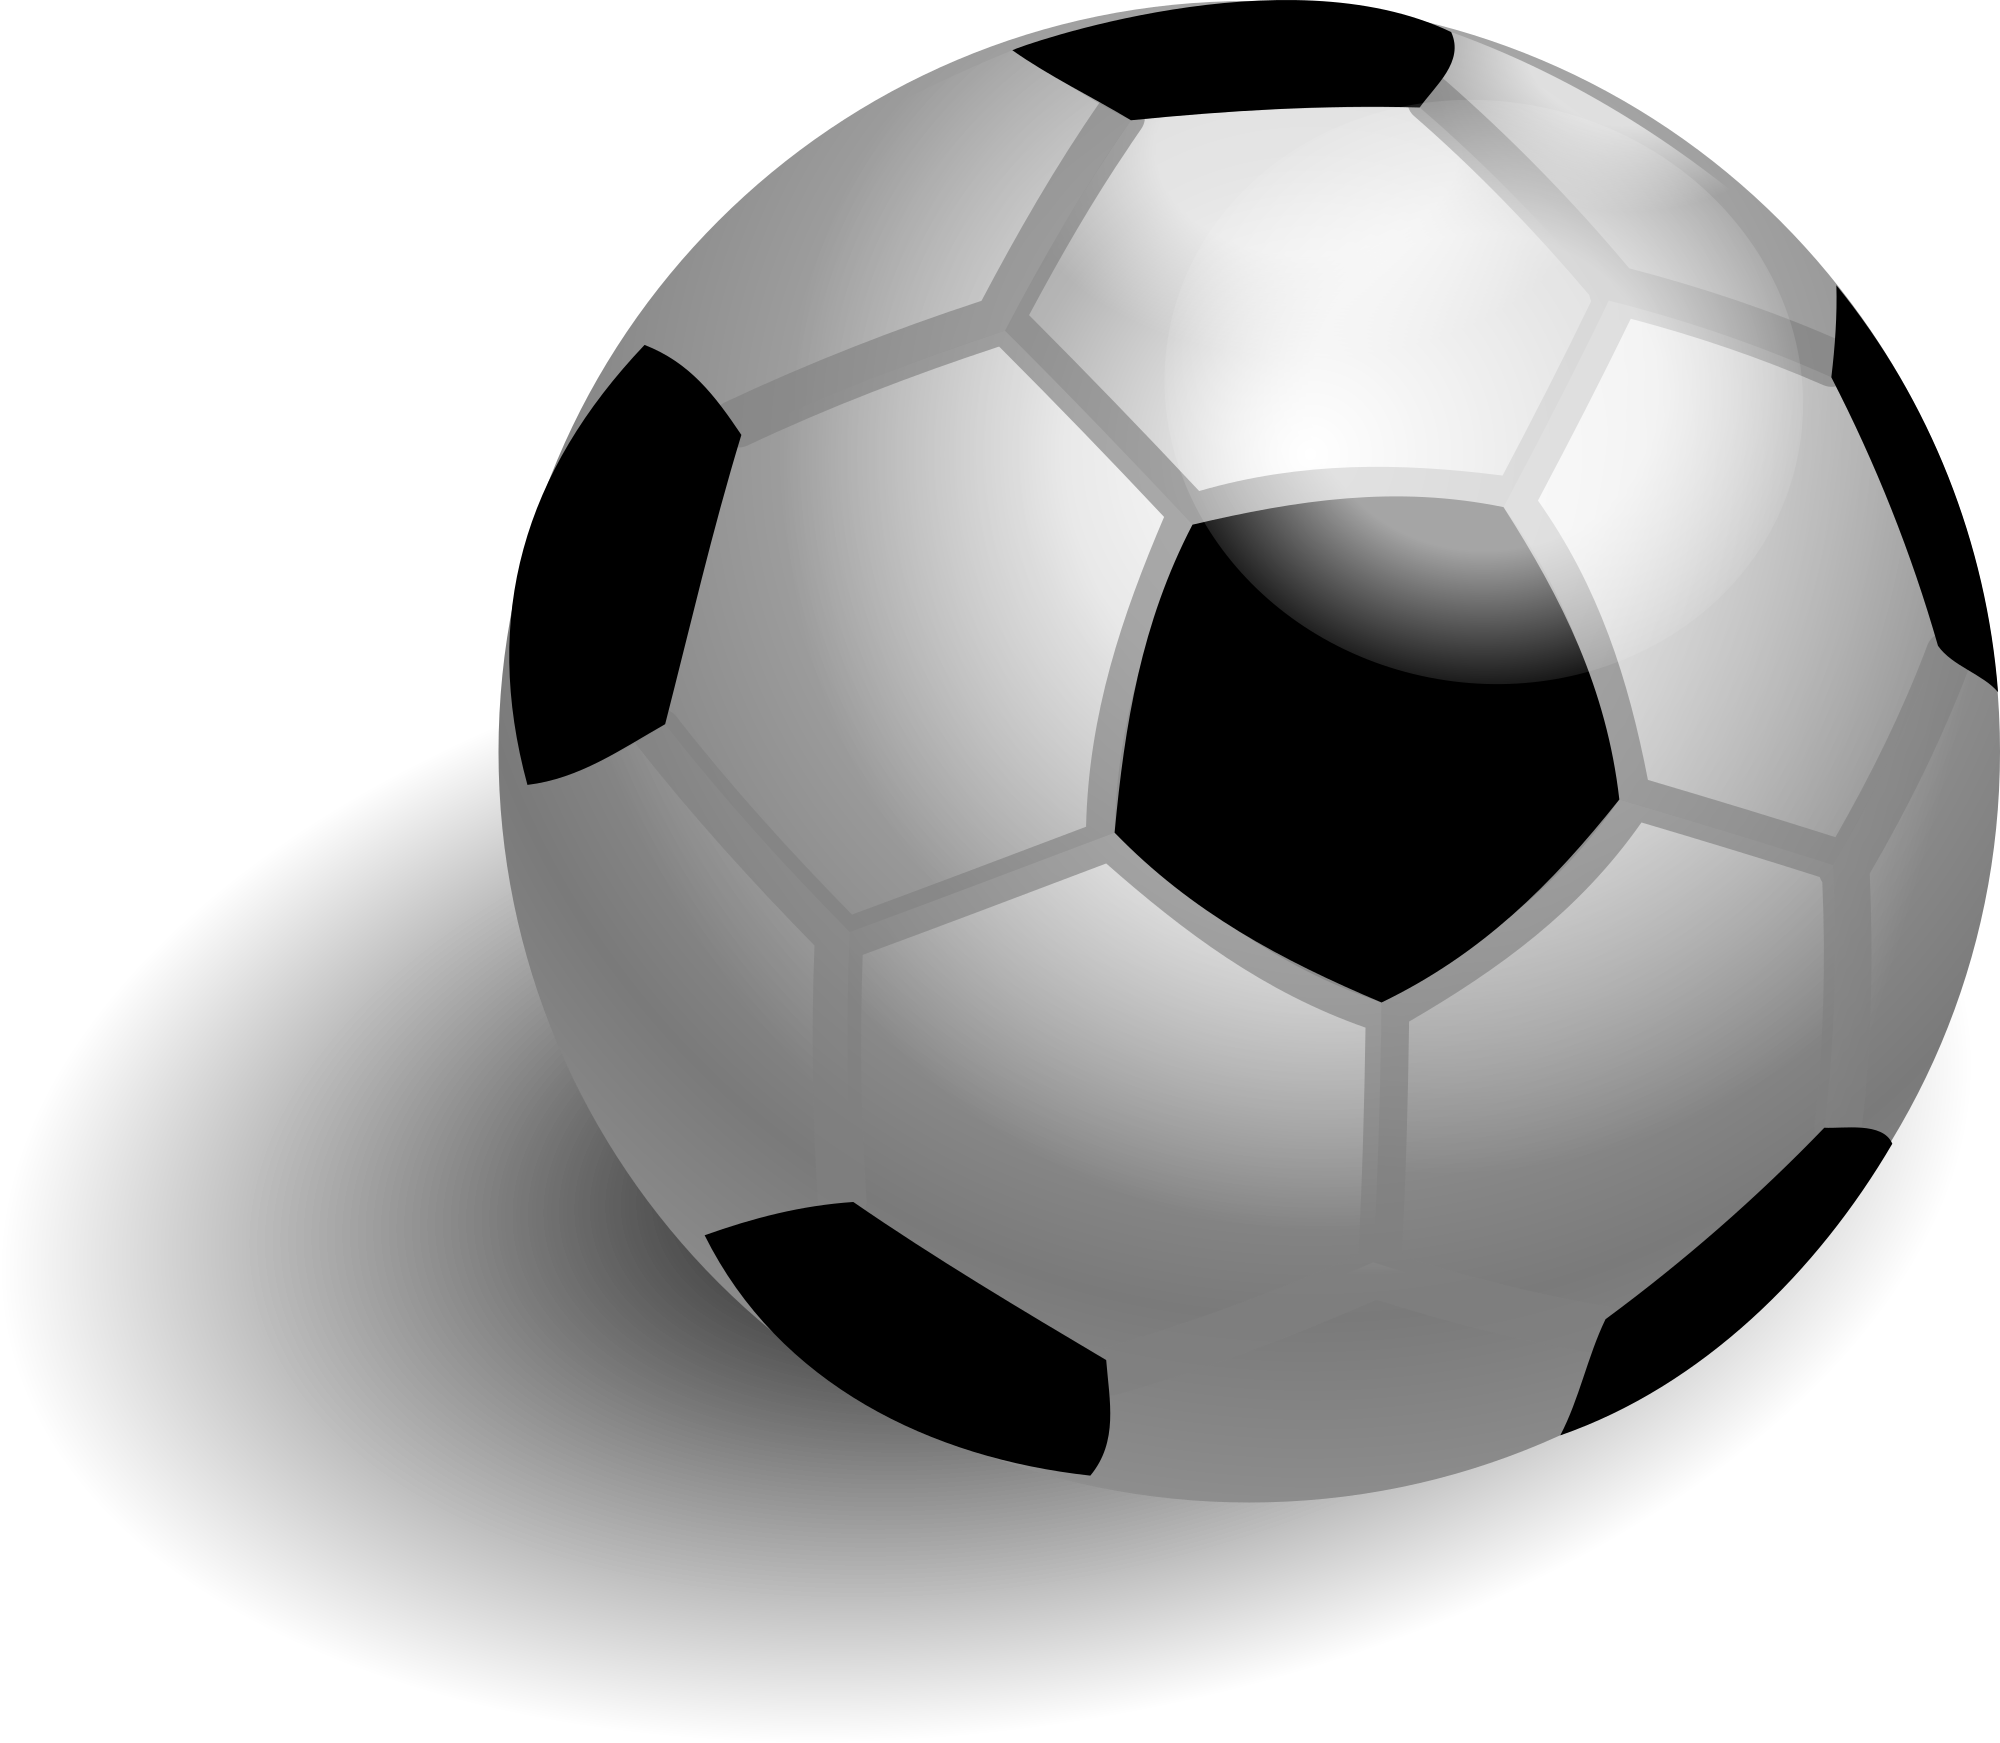 free vector clipart soccer ball - photo #13